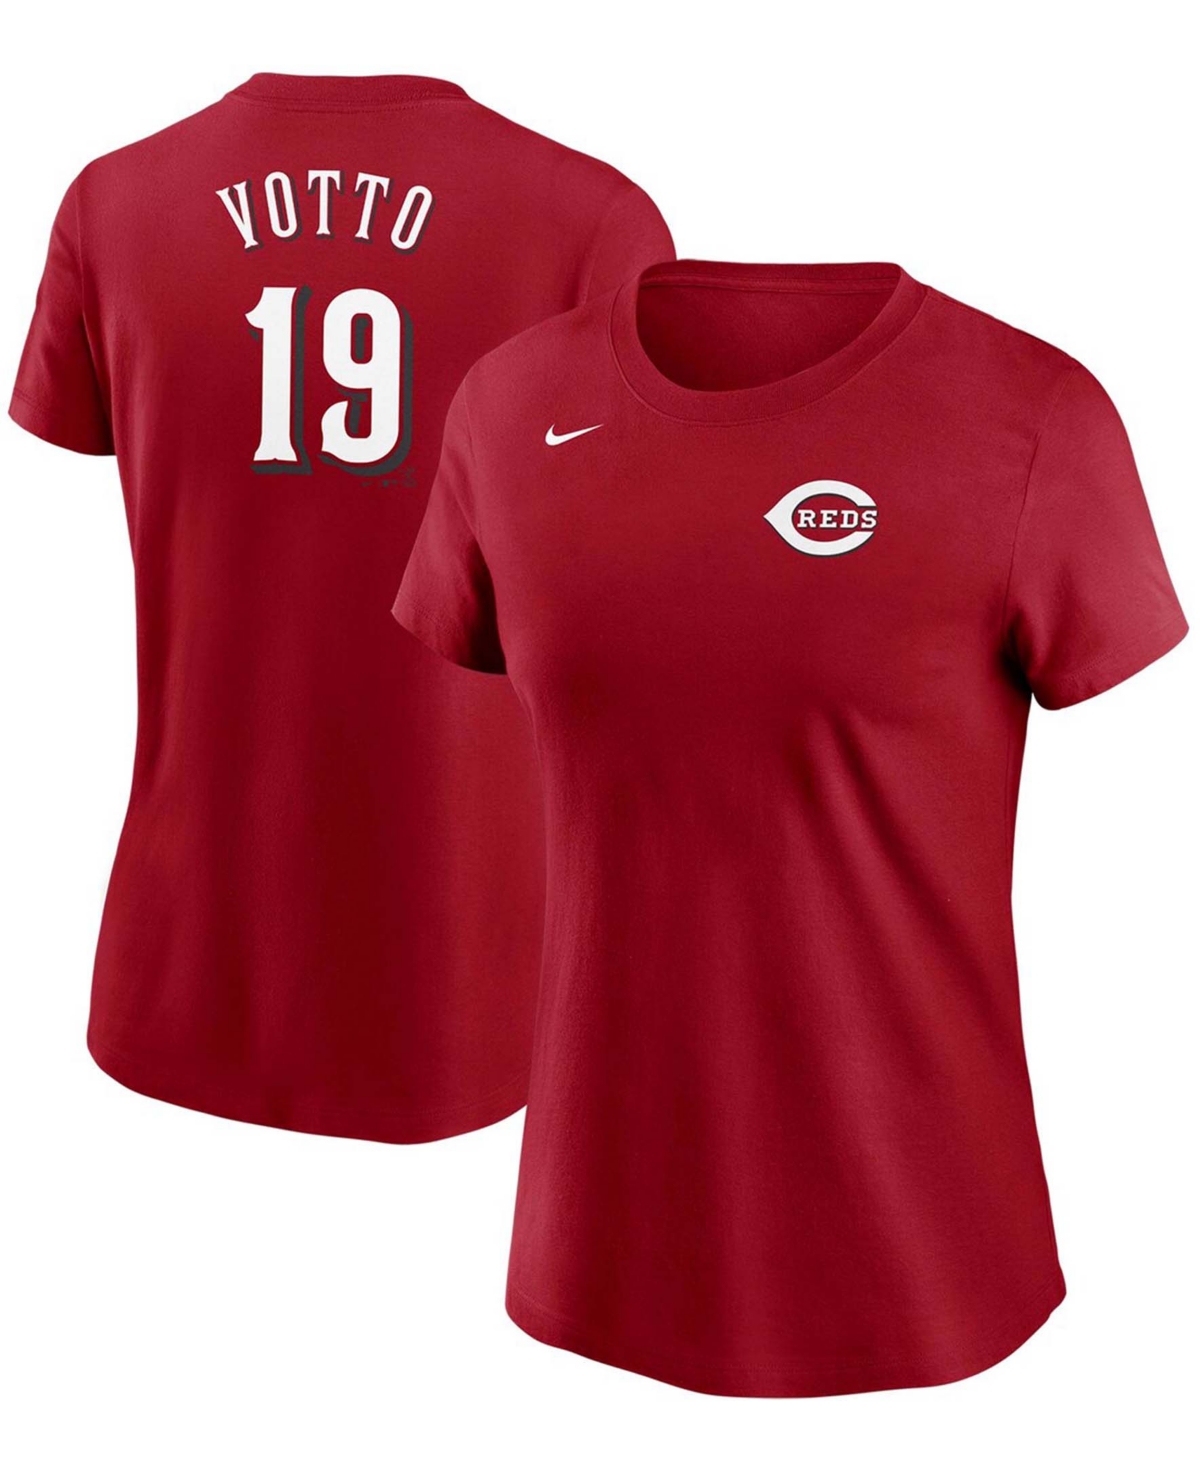 Women's Joey Votto Red Cincinnati Reds Name Number T-shirt